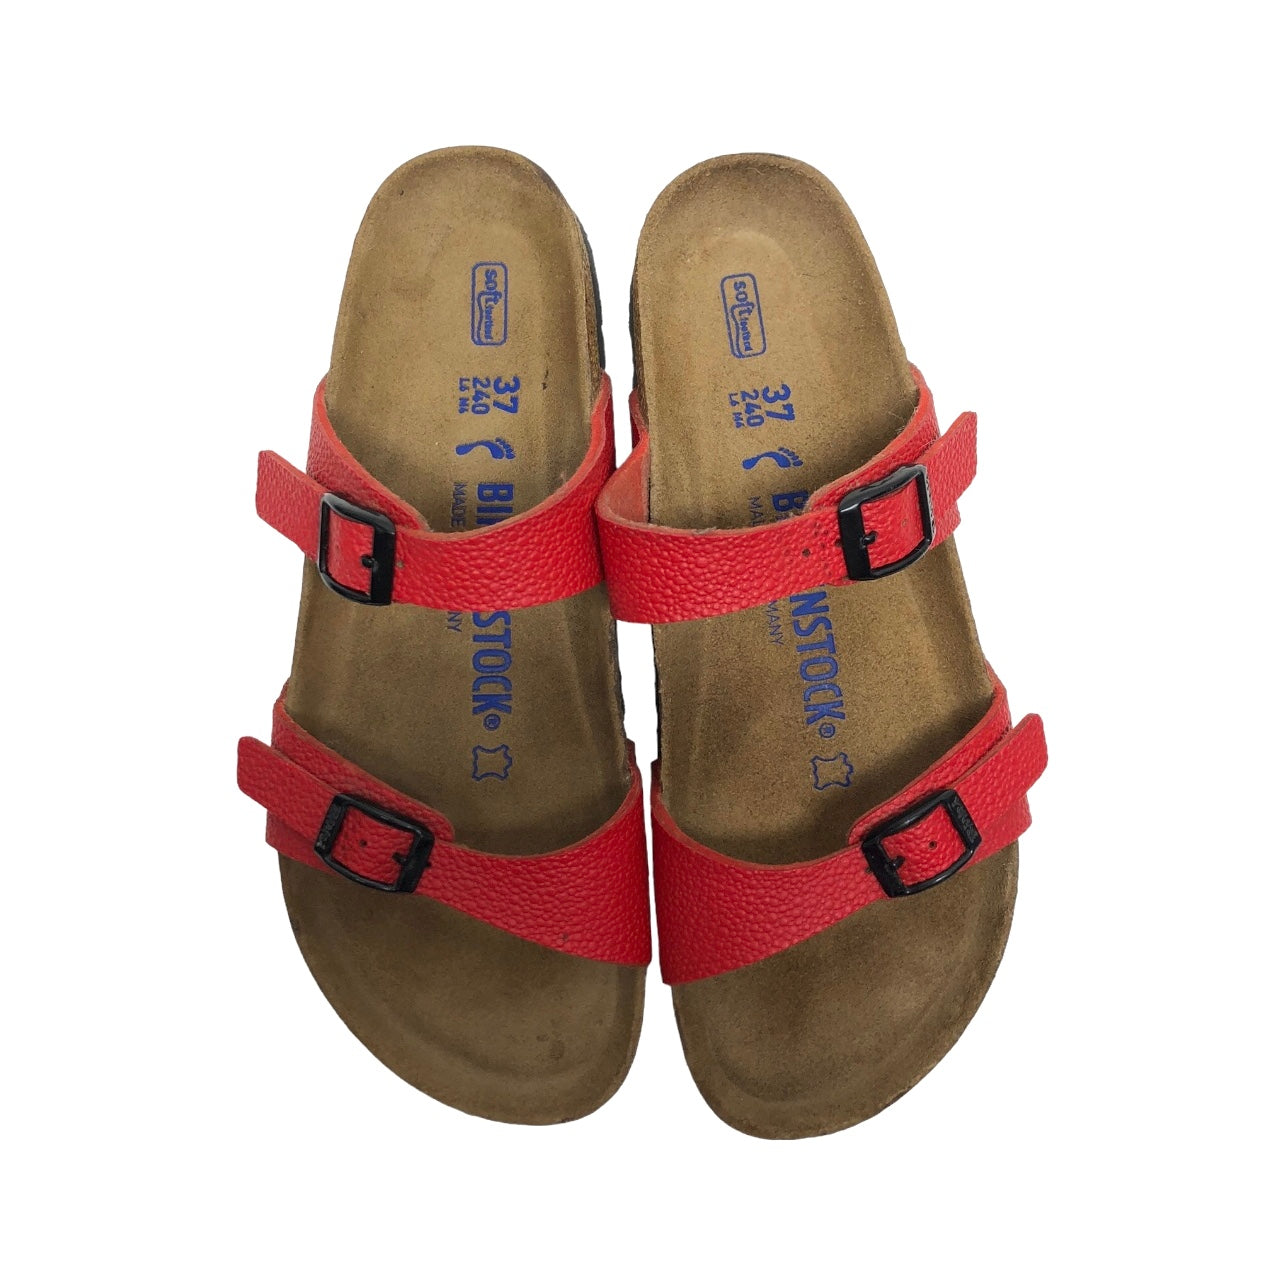 Red Sandals Flats Birkenstock, Size 6